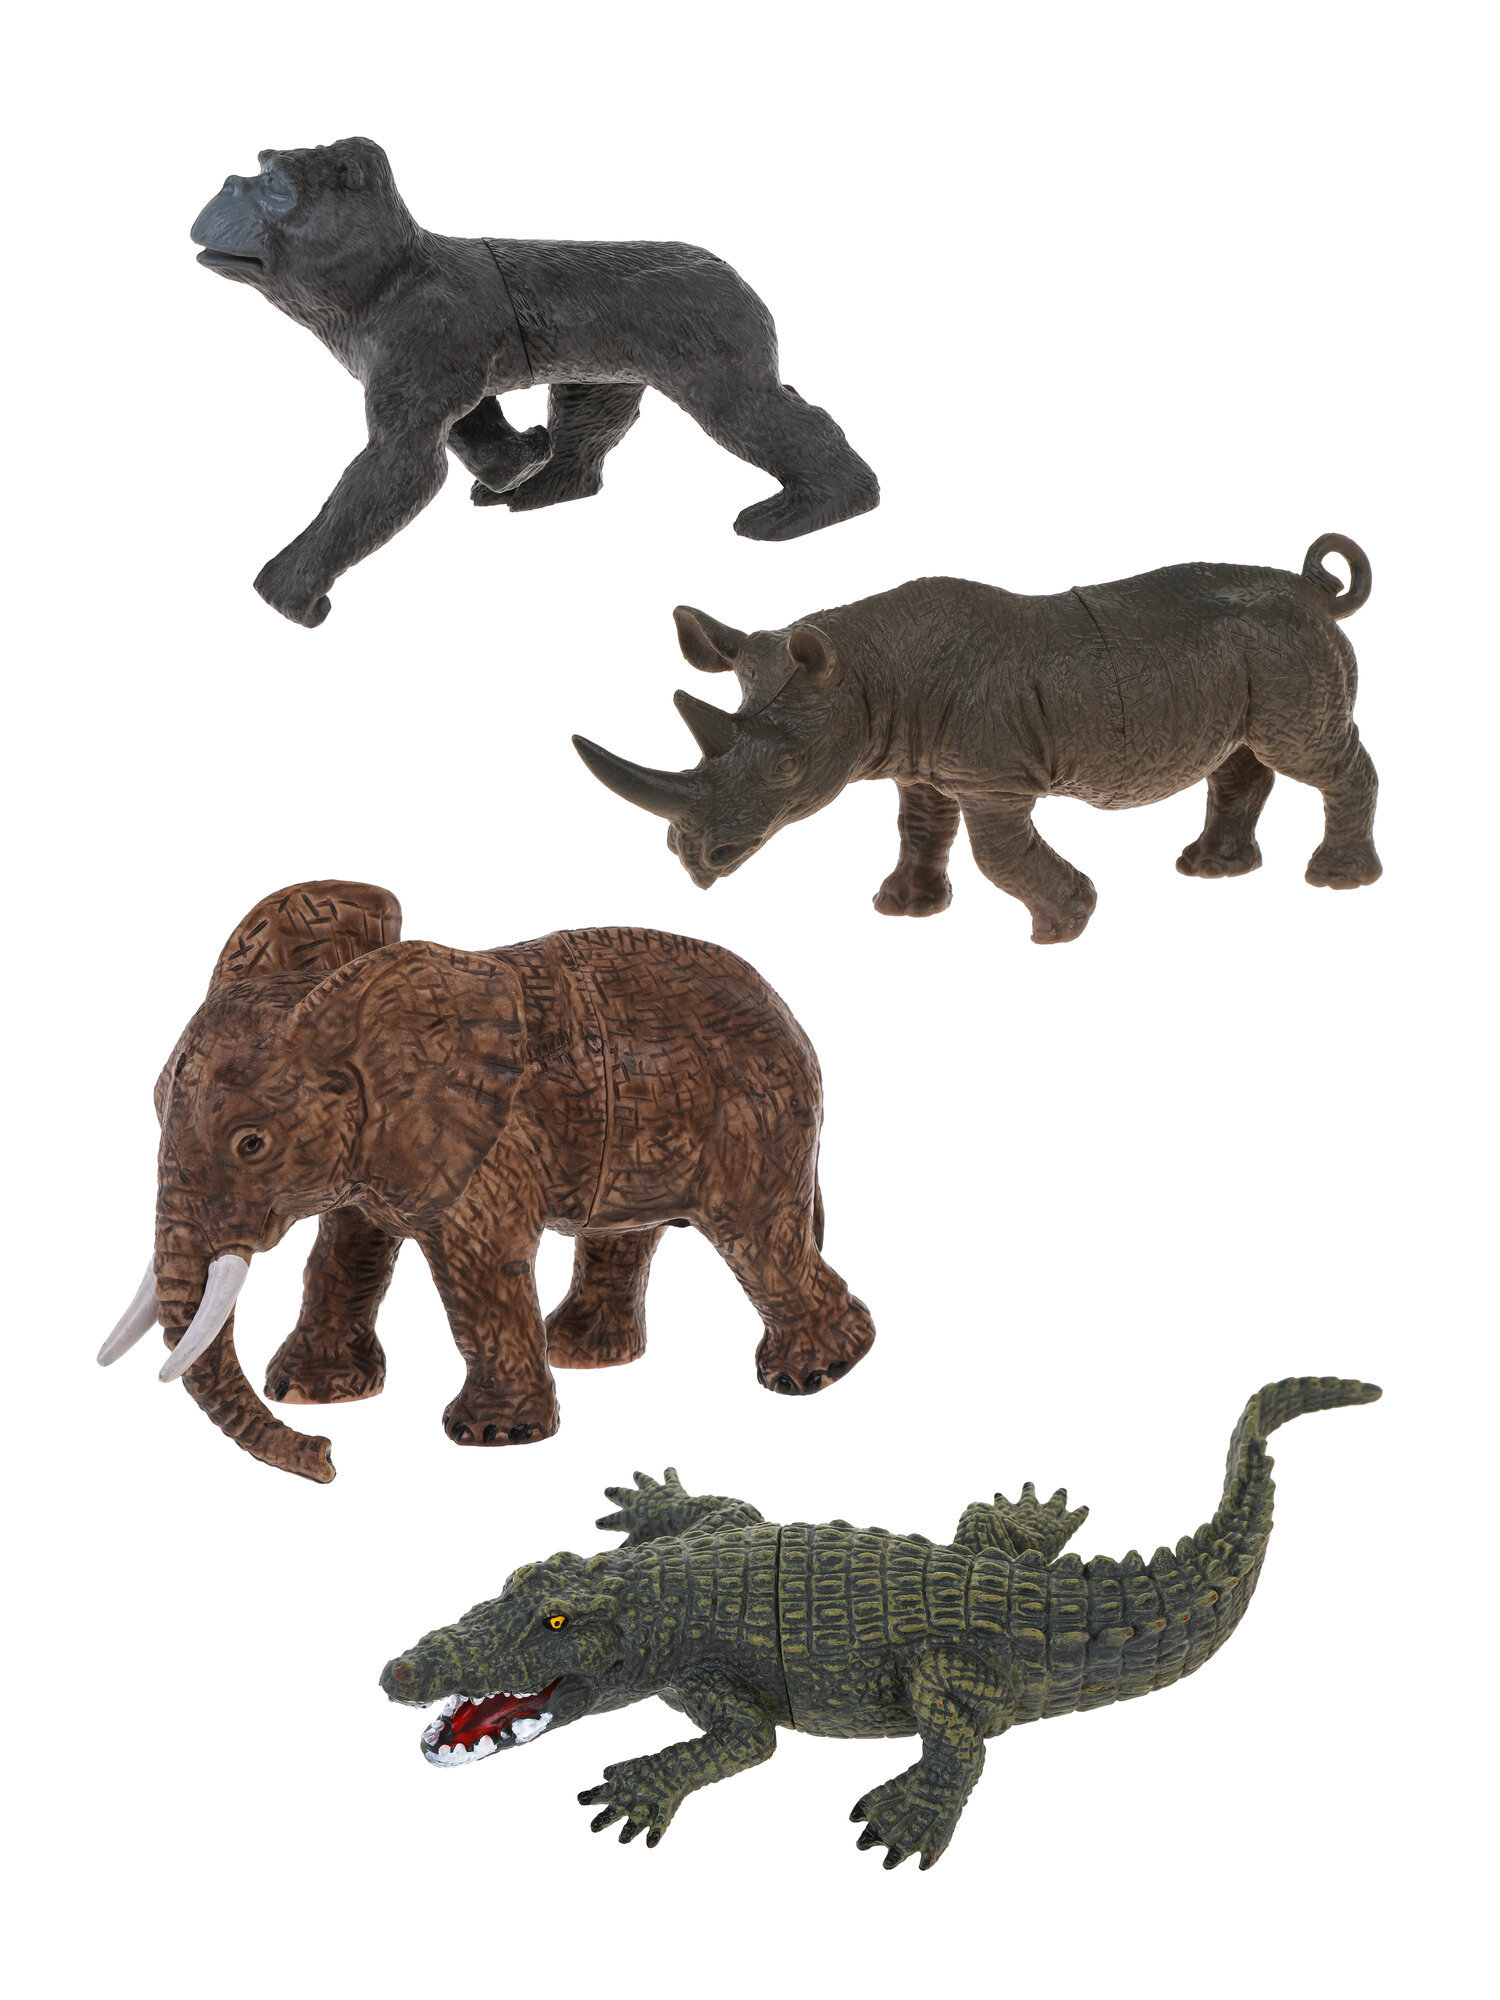 Фигурки животных: носорог, слон, крокодил, орангутанг